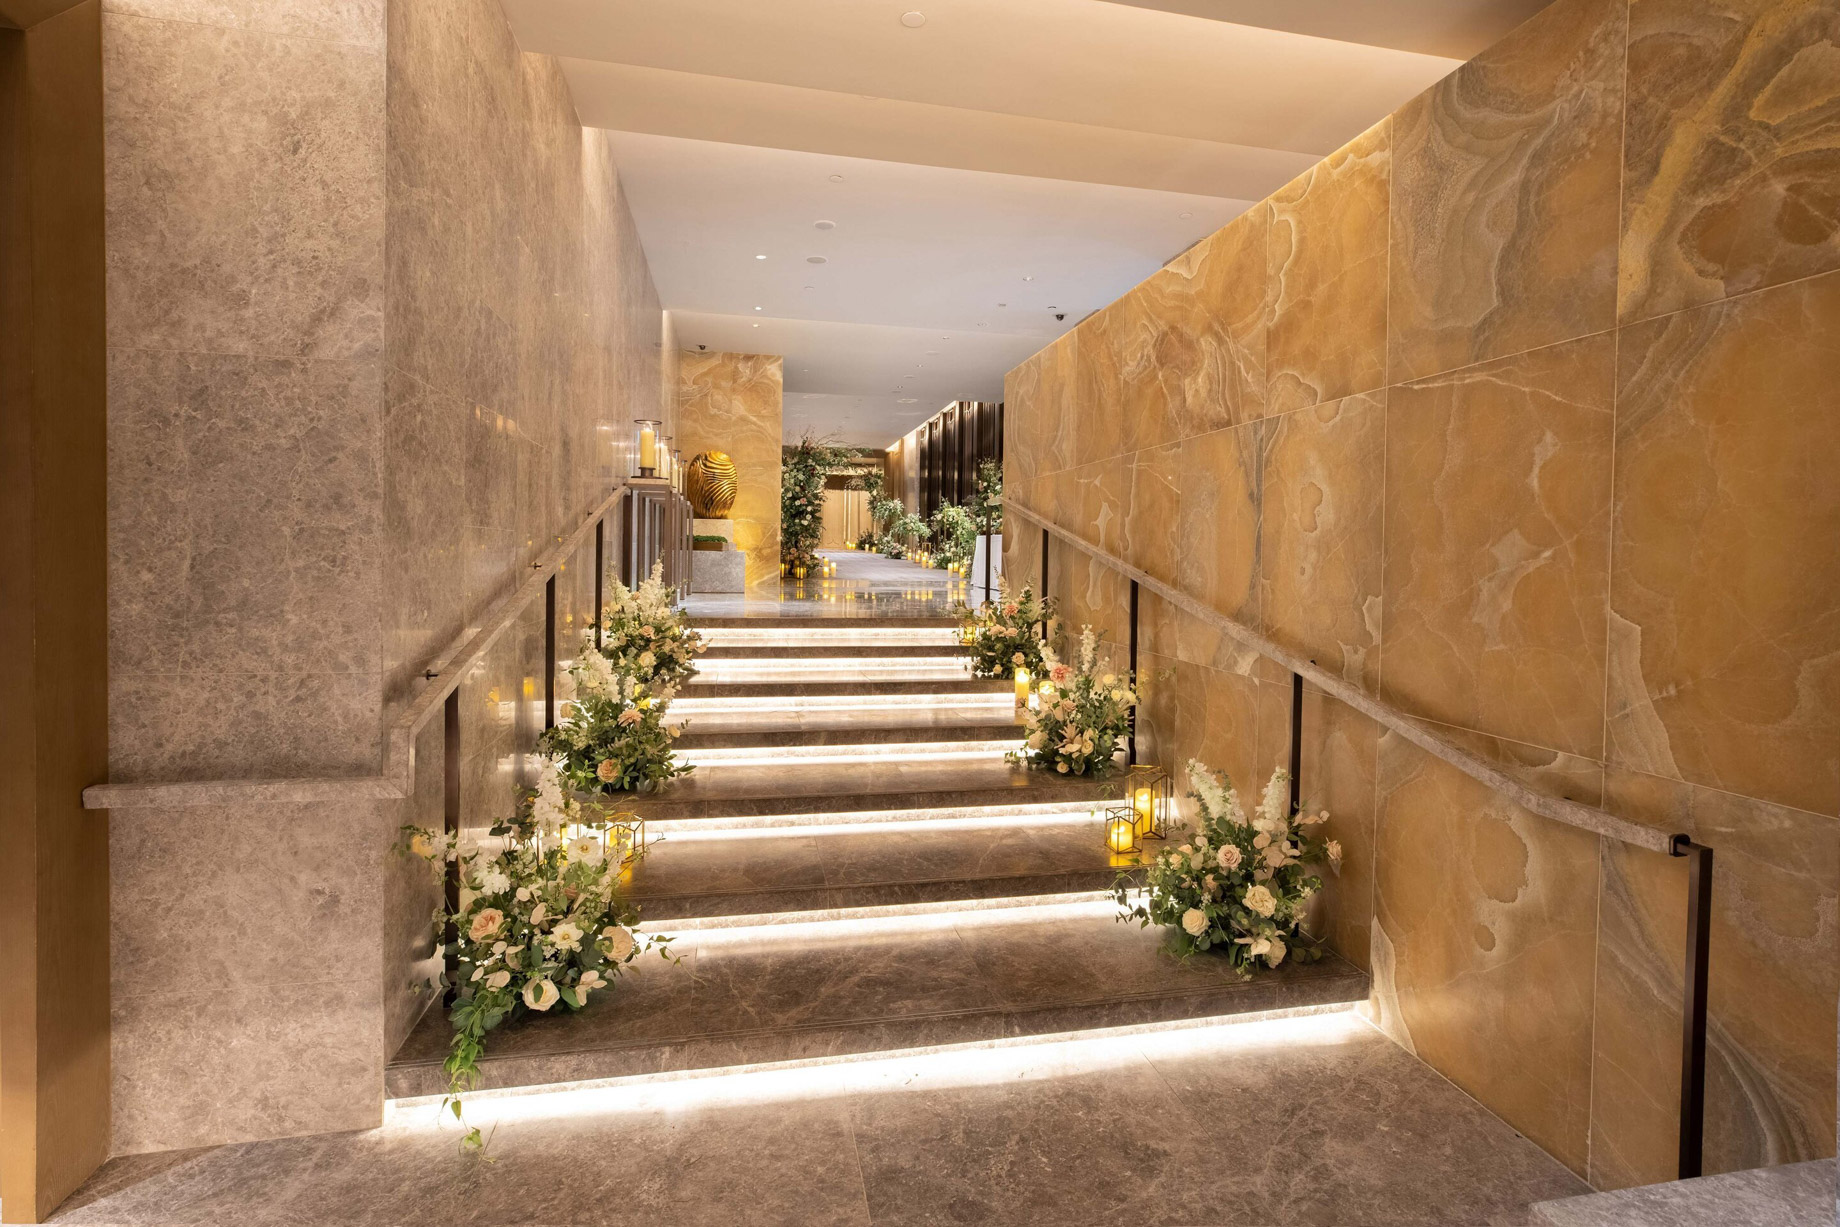 The St. Regis Hong Kong Hotel – Wan Chai, Hong Kong – Skybridge Stairs Wedding Registration